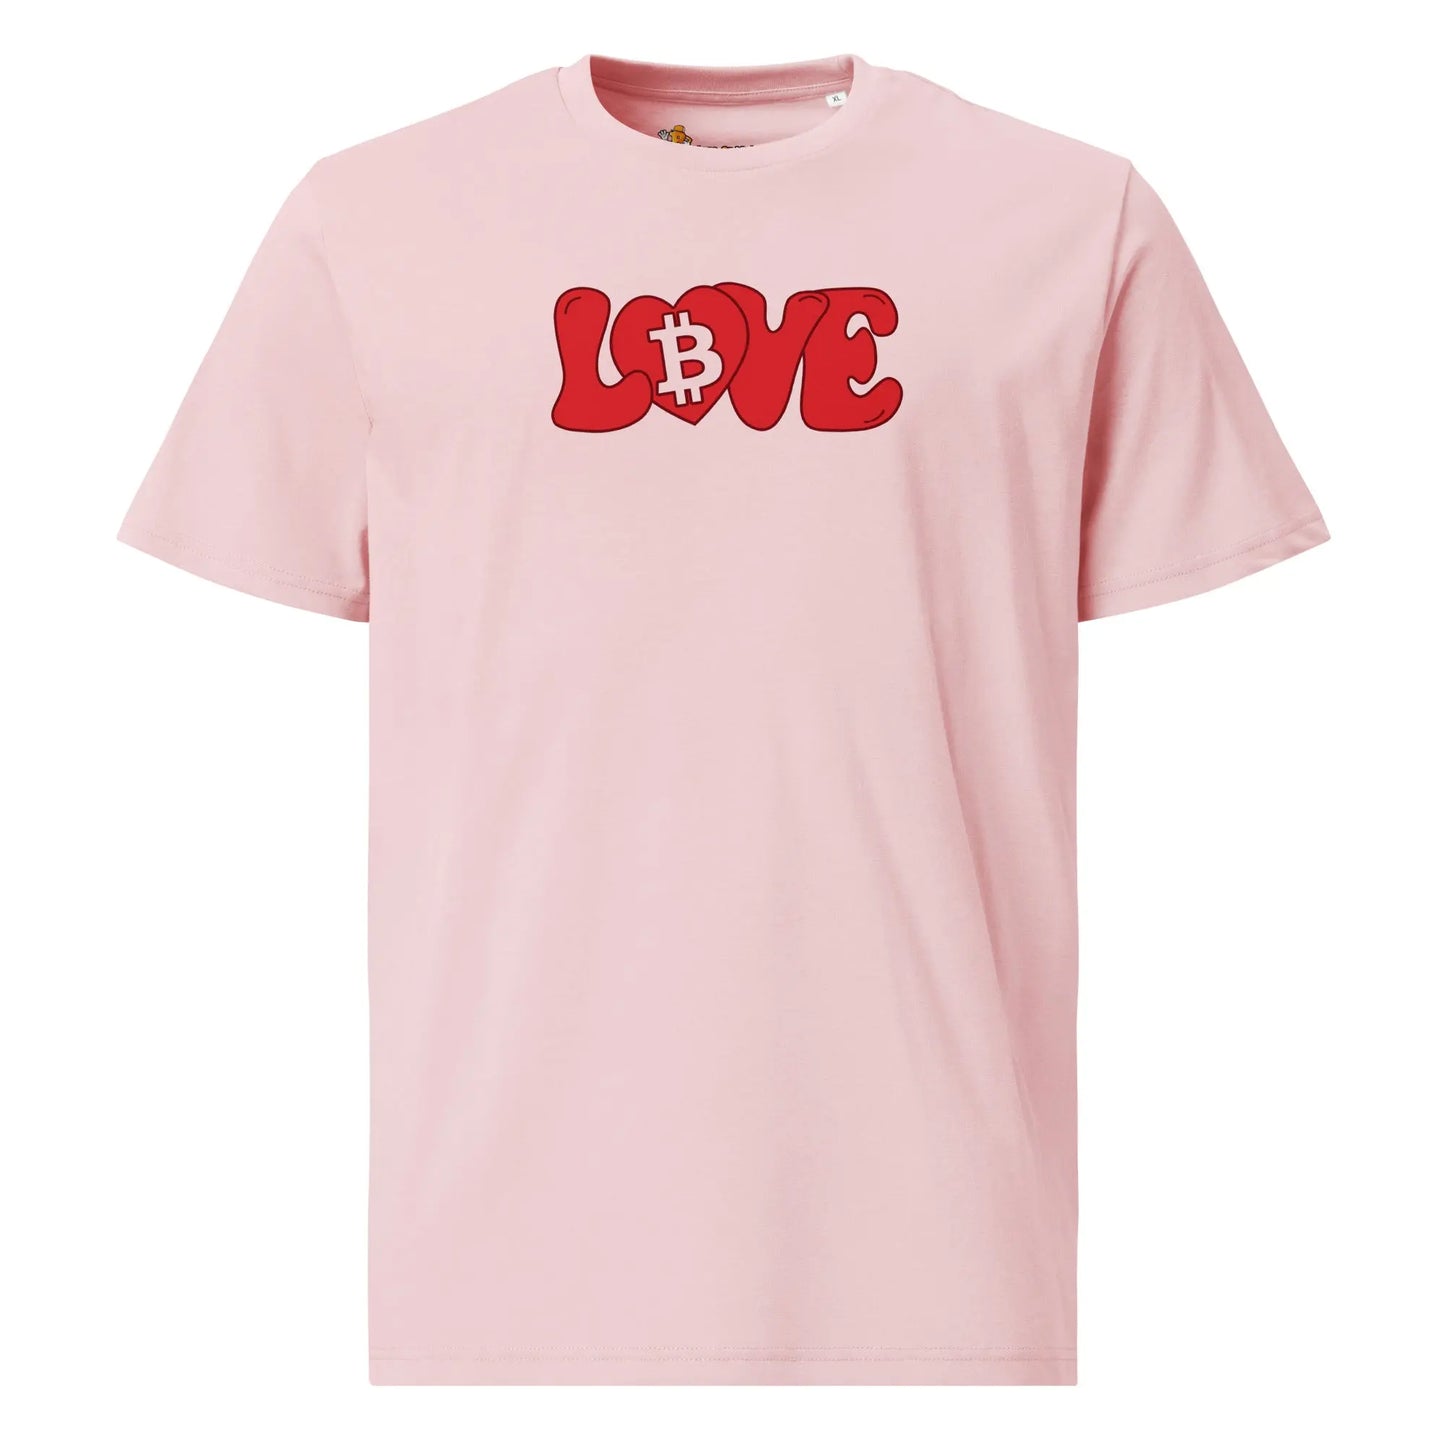 Groovy Love - Premium Unisex Organic Cotton Bitcoin T-shirt Pink Color